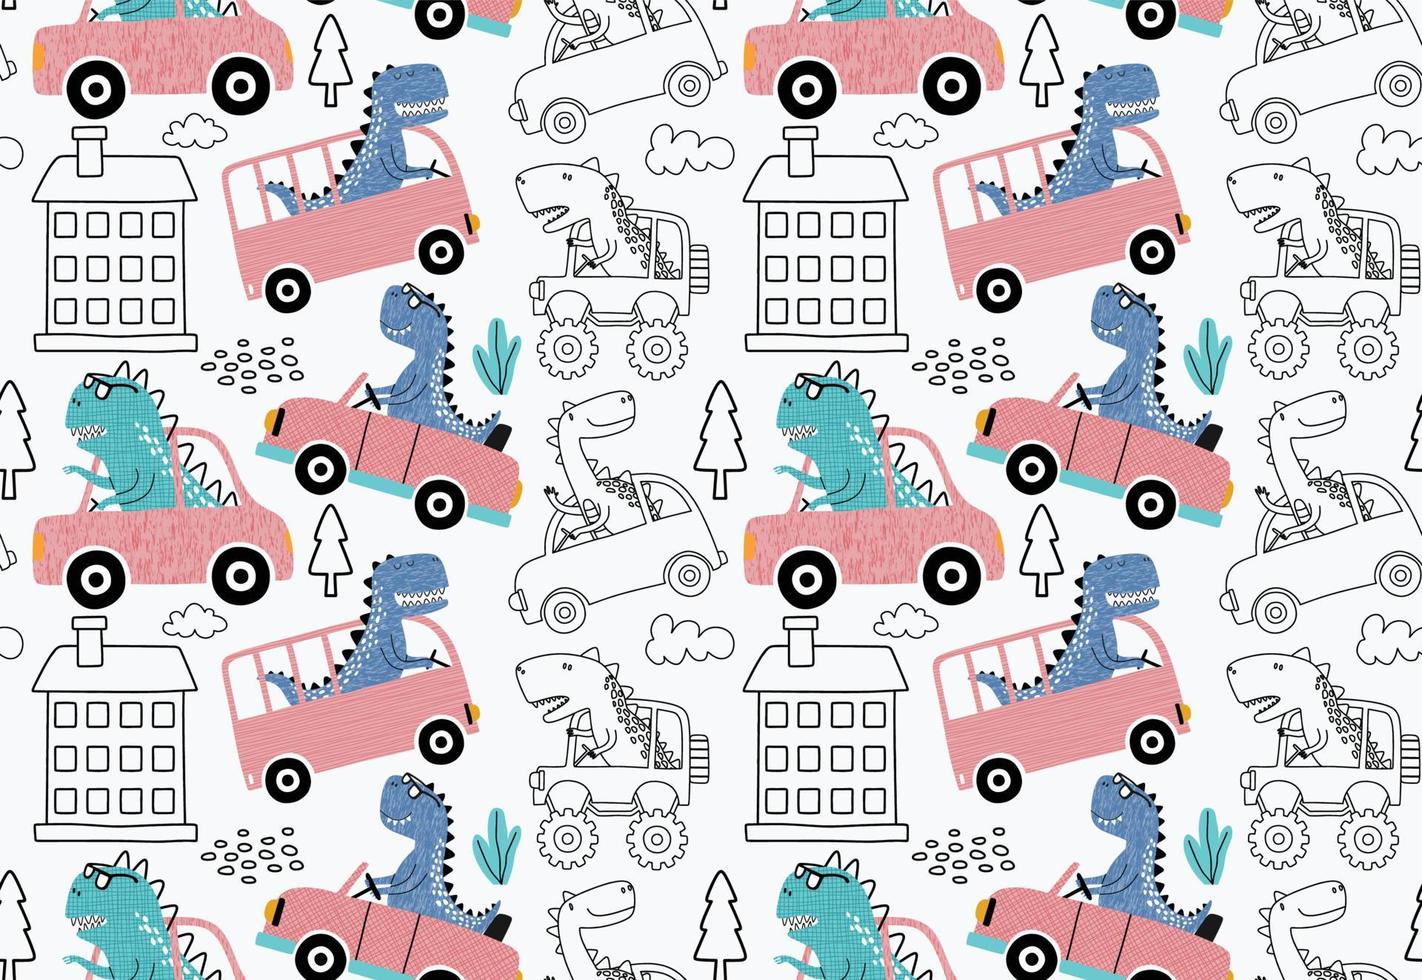 patrón impecable con lindos dinosaurios conduciendo autos. 14864190 Vector  en Vecteezy